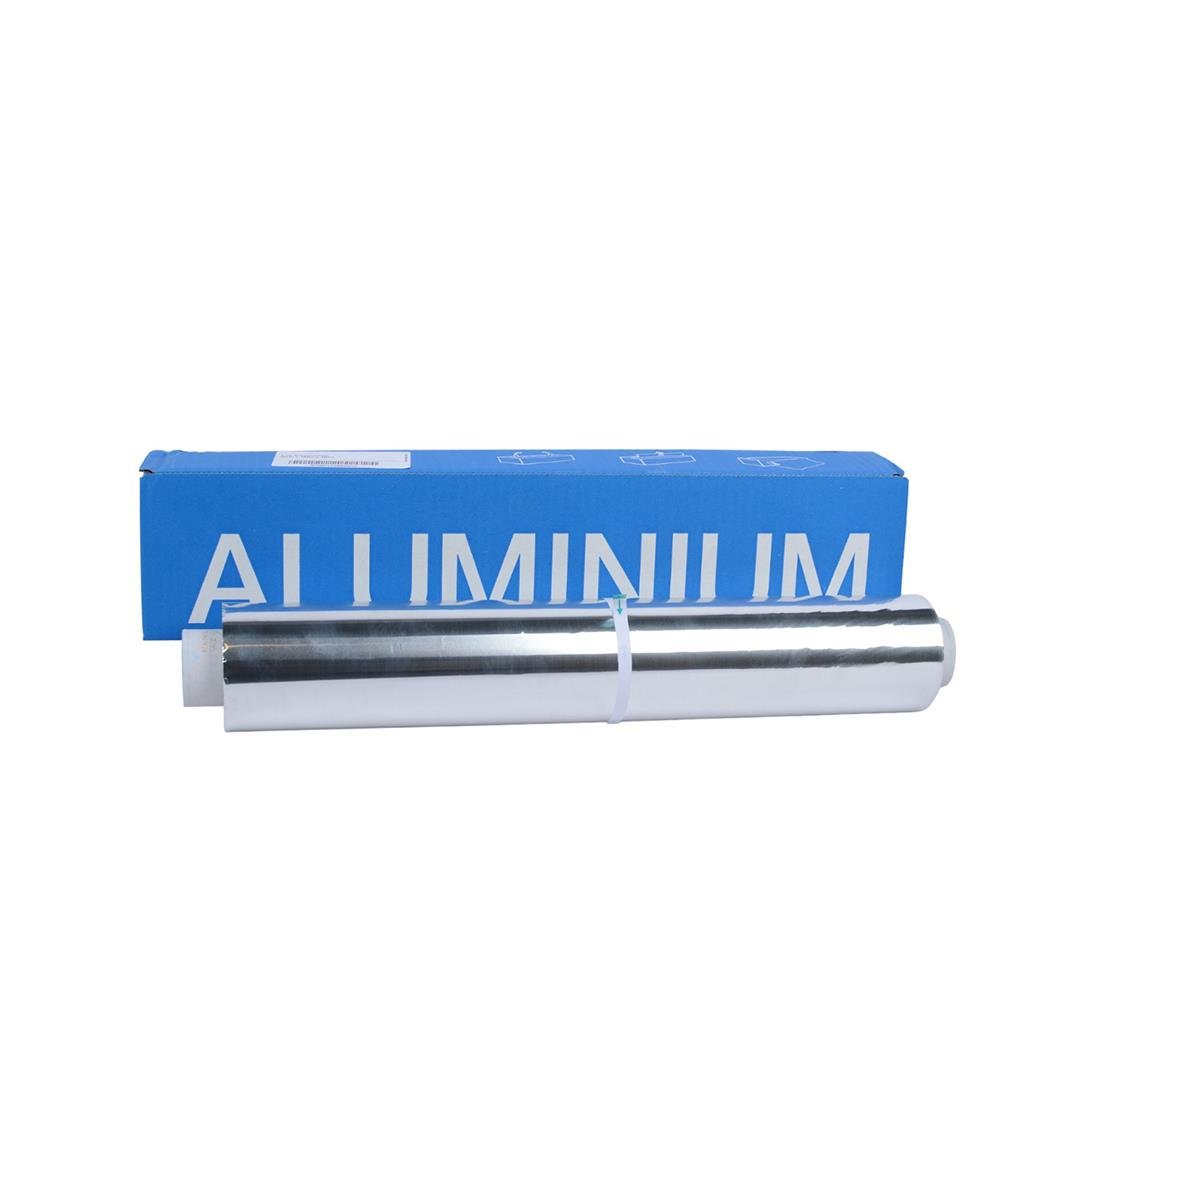 Aluminiumfolie Grillfolie i box 18my 45cm x 150m 61100136_1